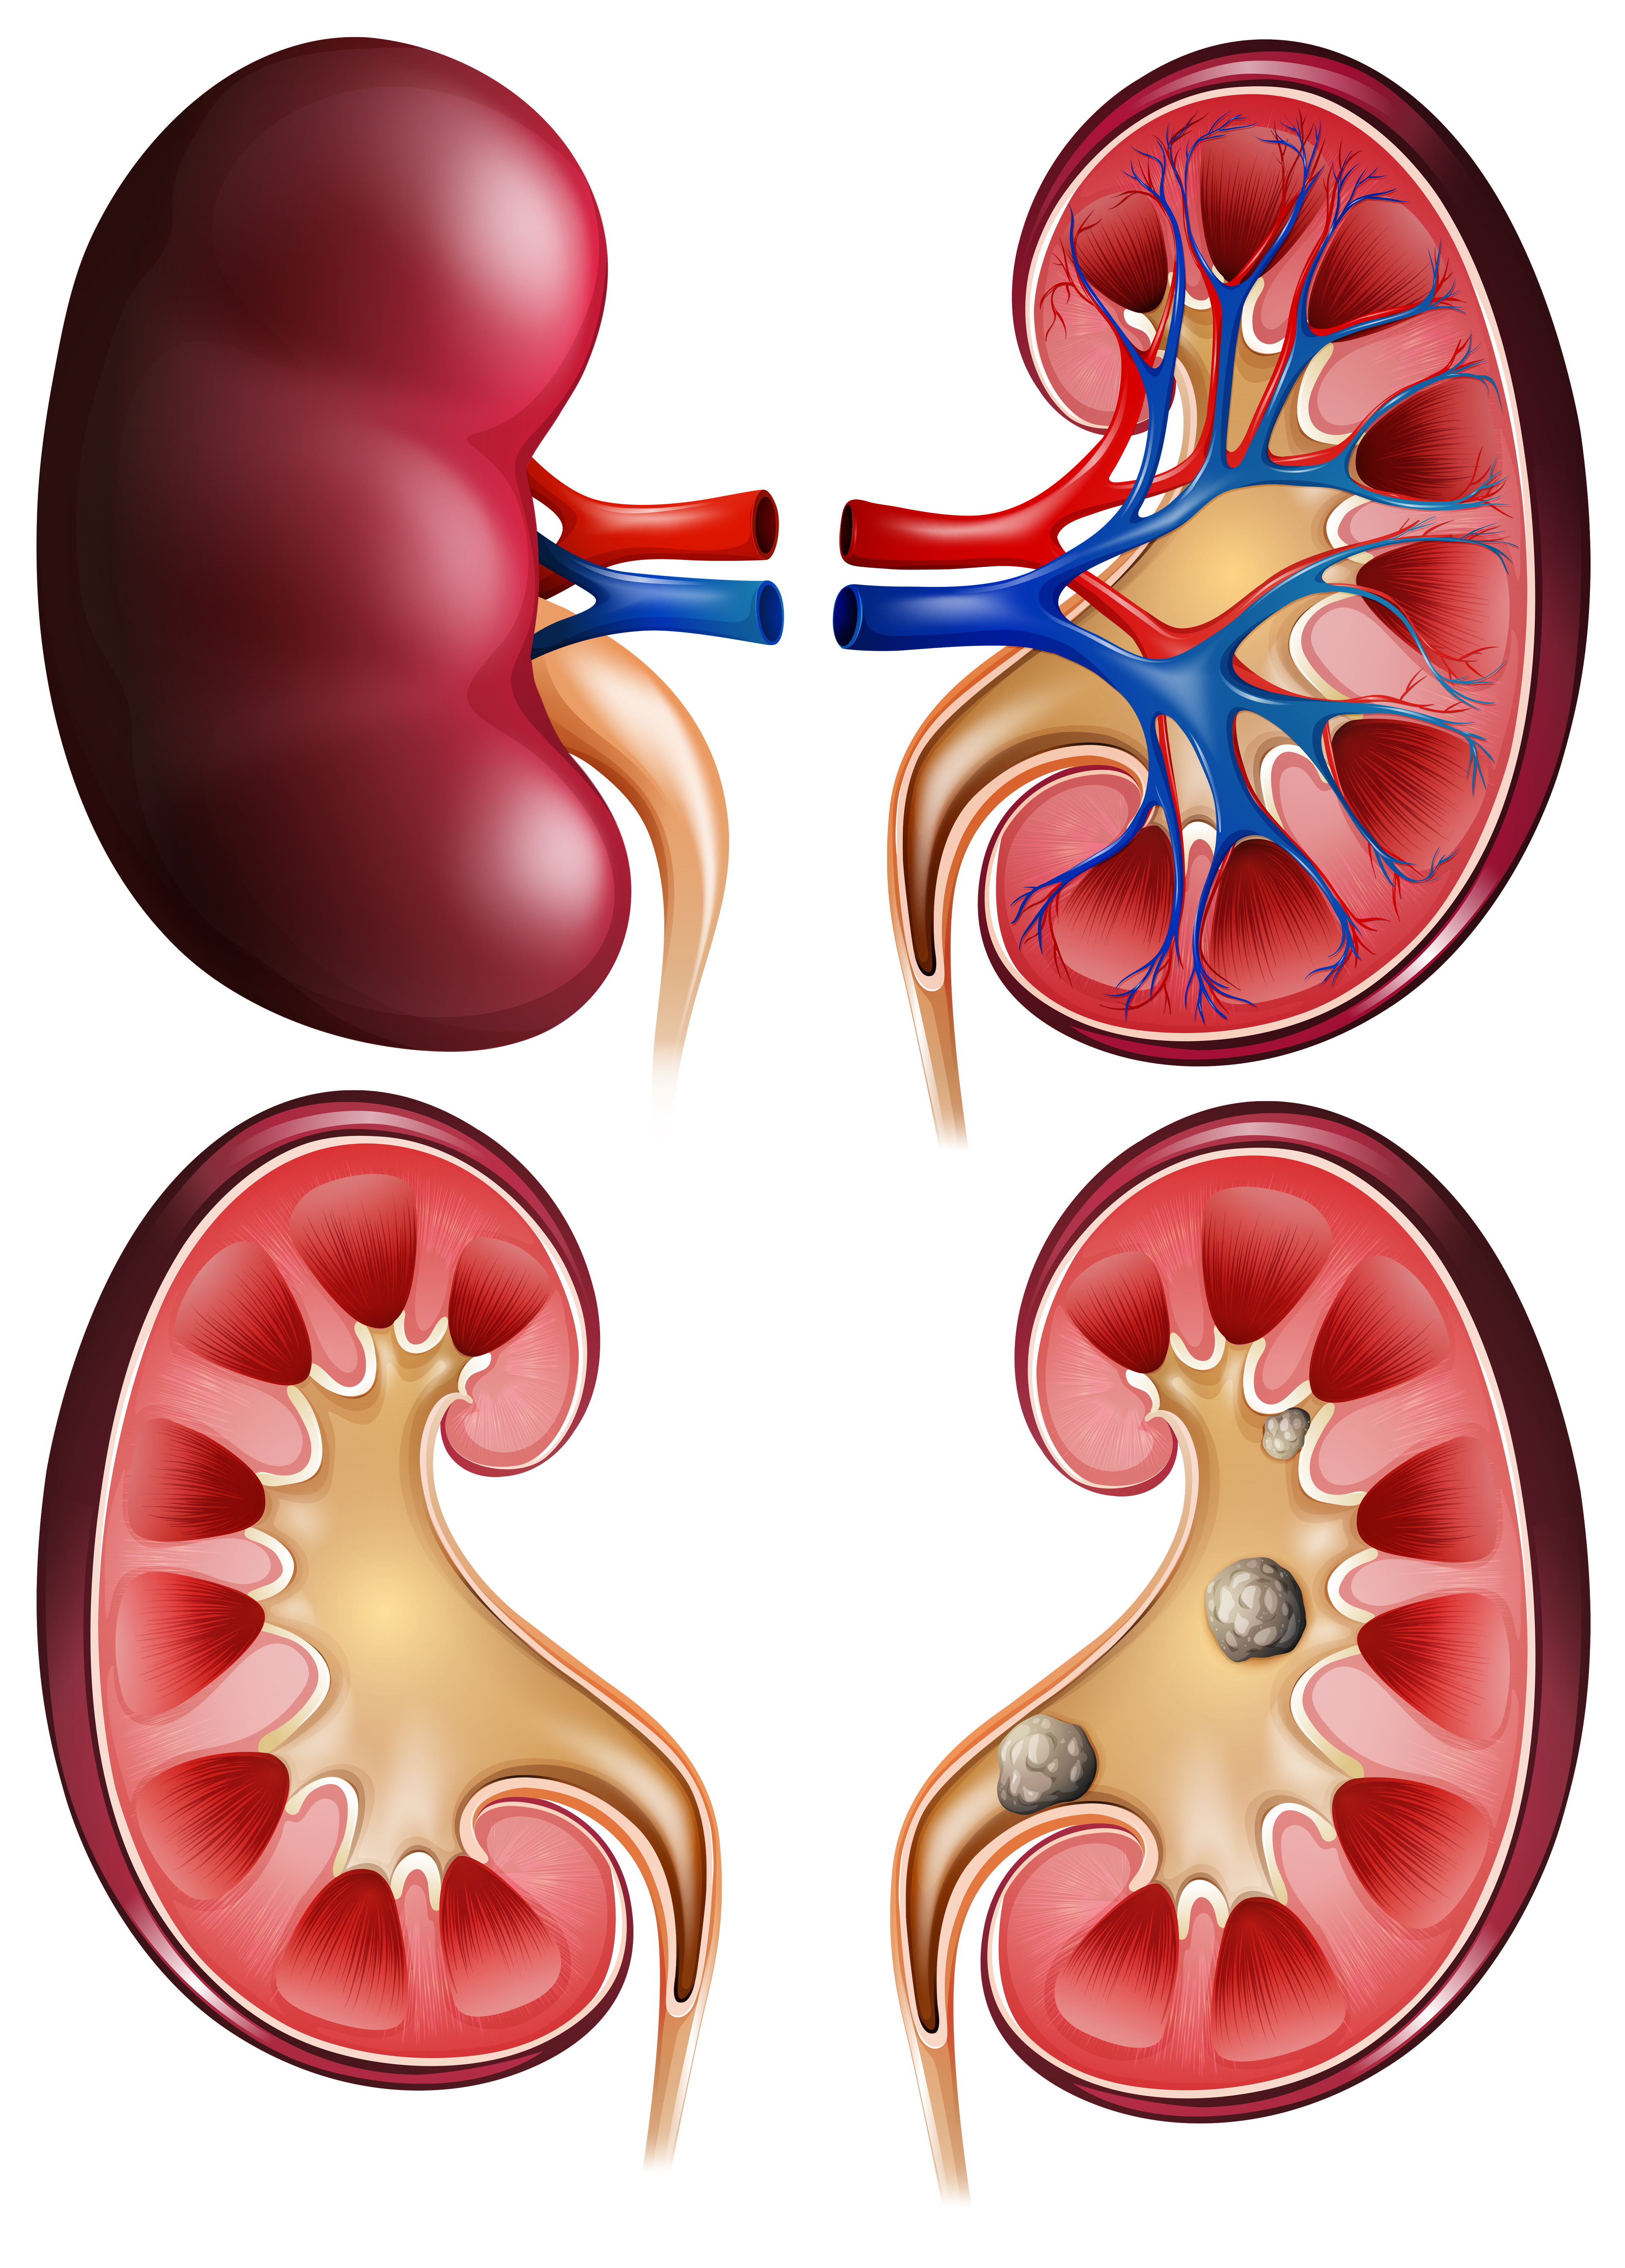 Kidneys and kidney stones on poster 455516 Vector Art at Vecteezy